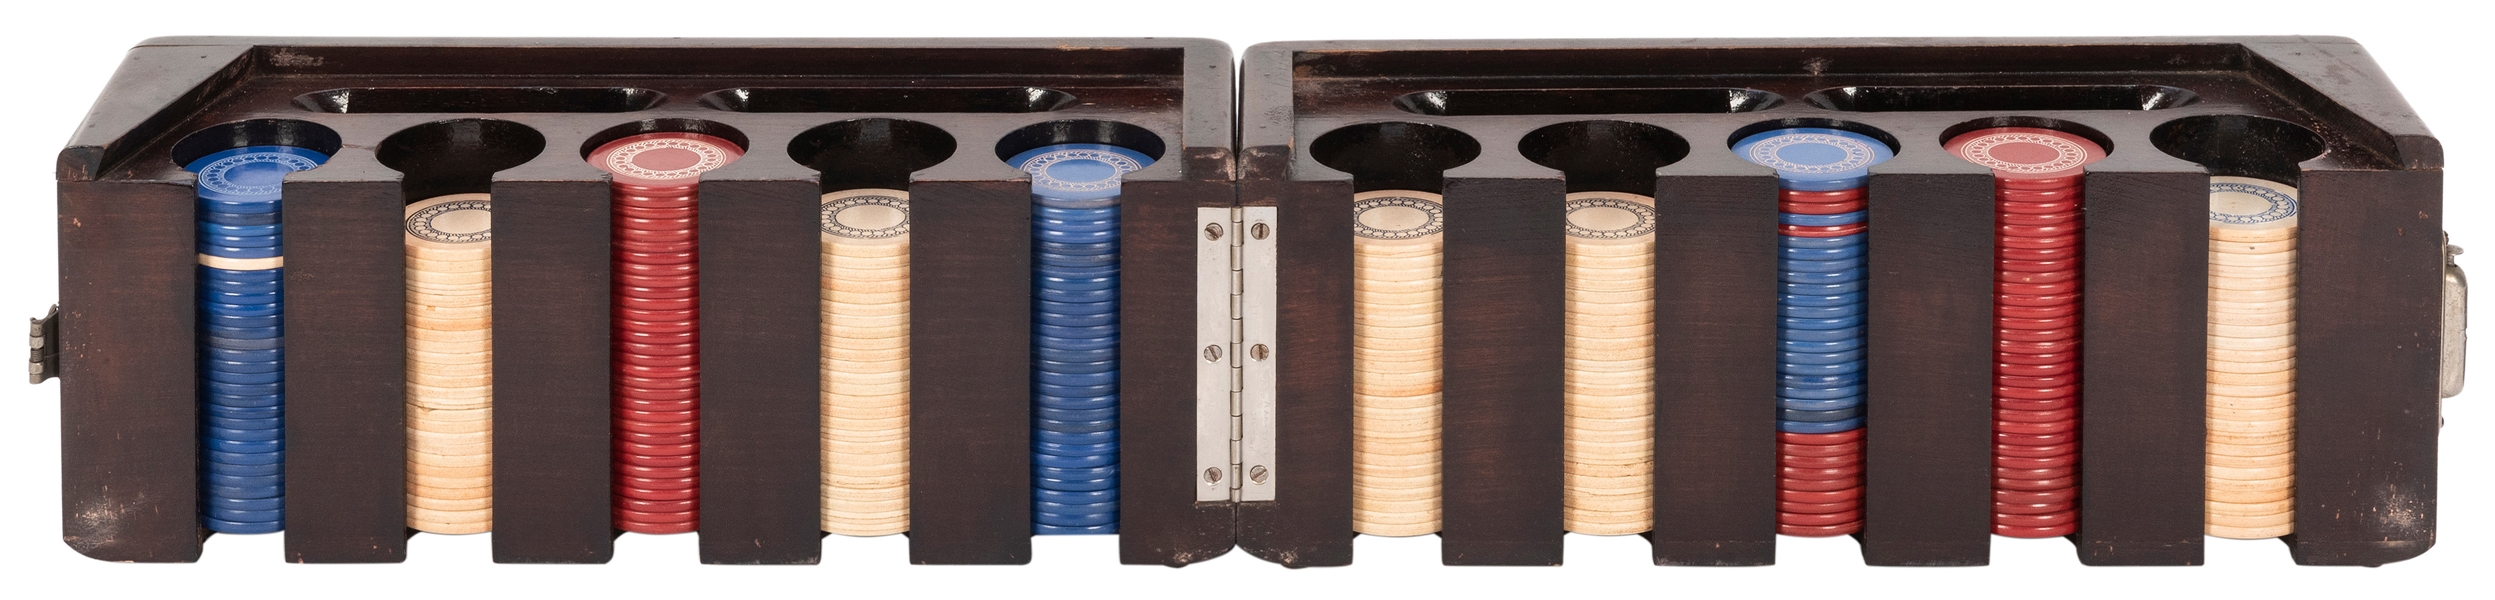  Expandable Antique Wooden Poker Chip Set. Circa 1920s. Hard...